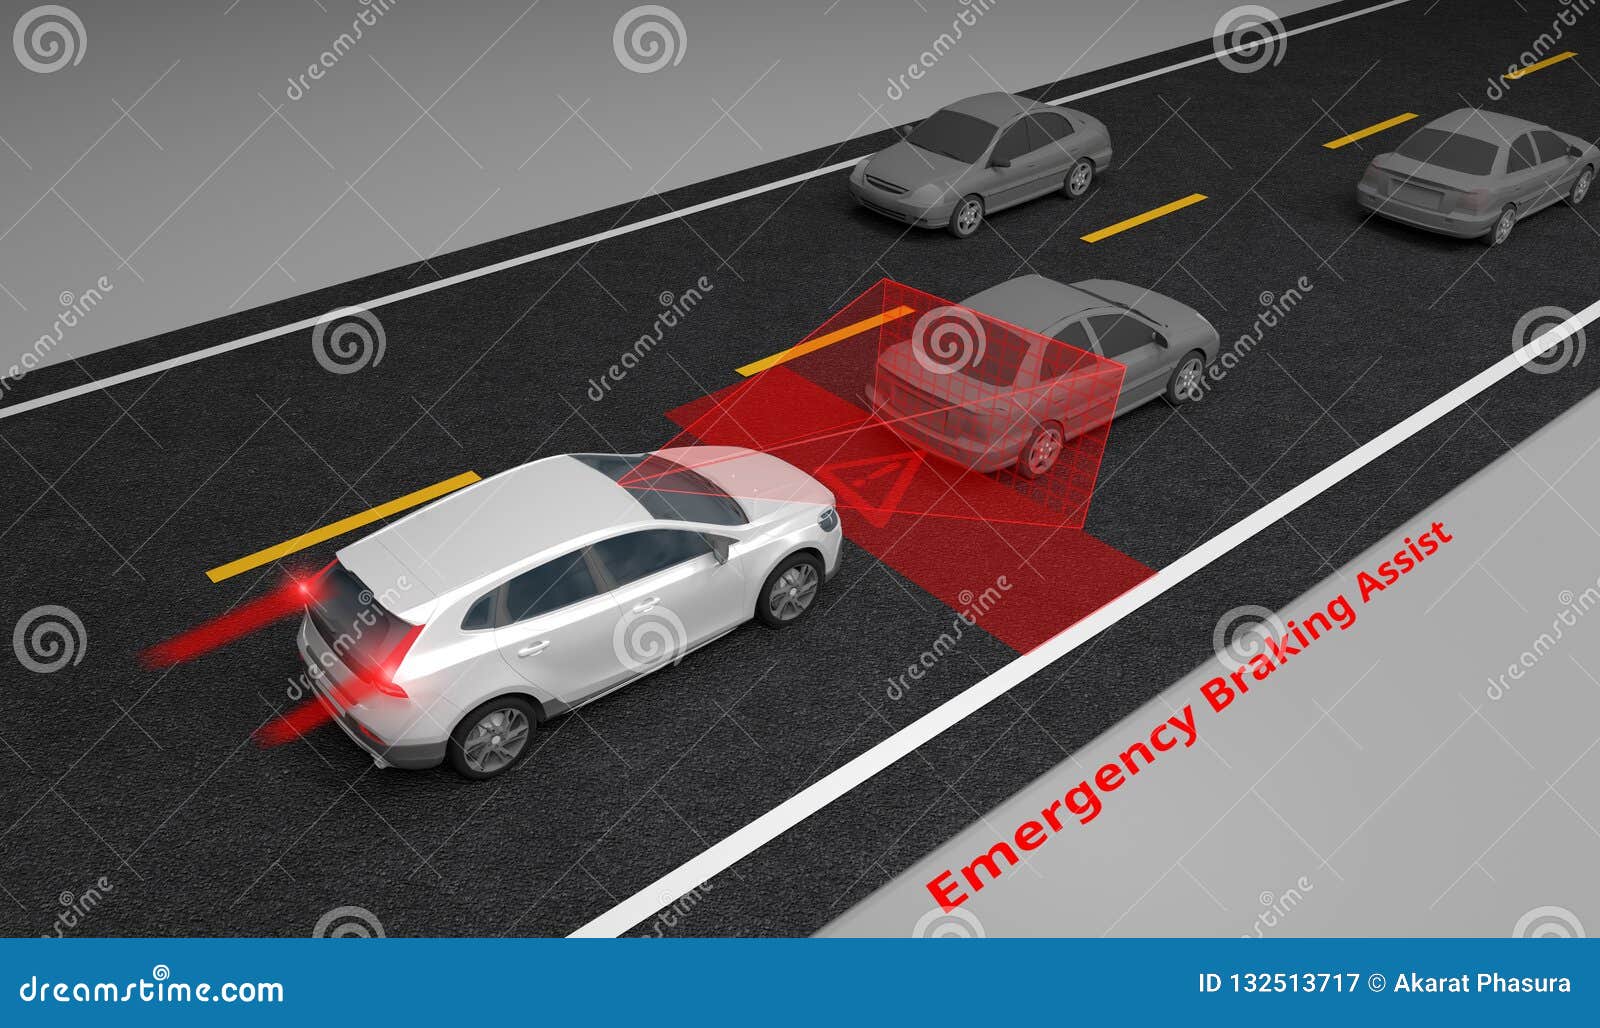 emergency braking assist eba sysyem to avoid car crash concept. smart car technology, 3d rendering